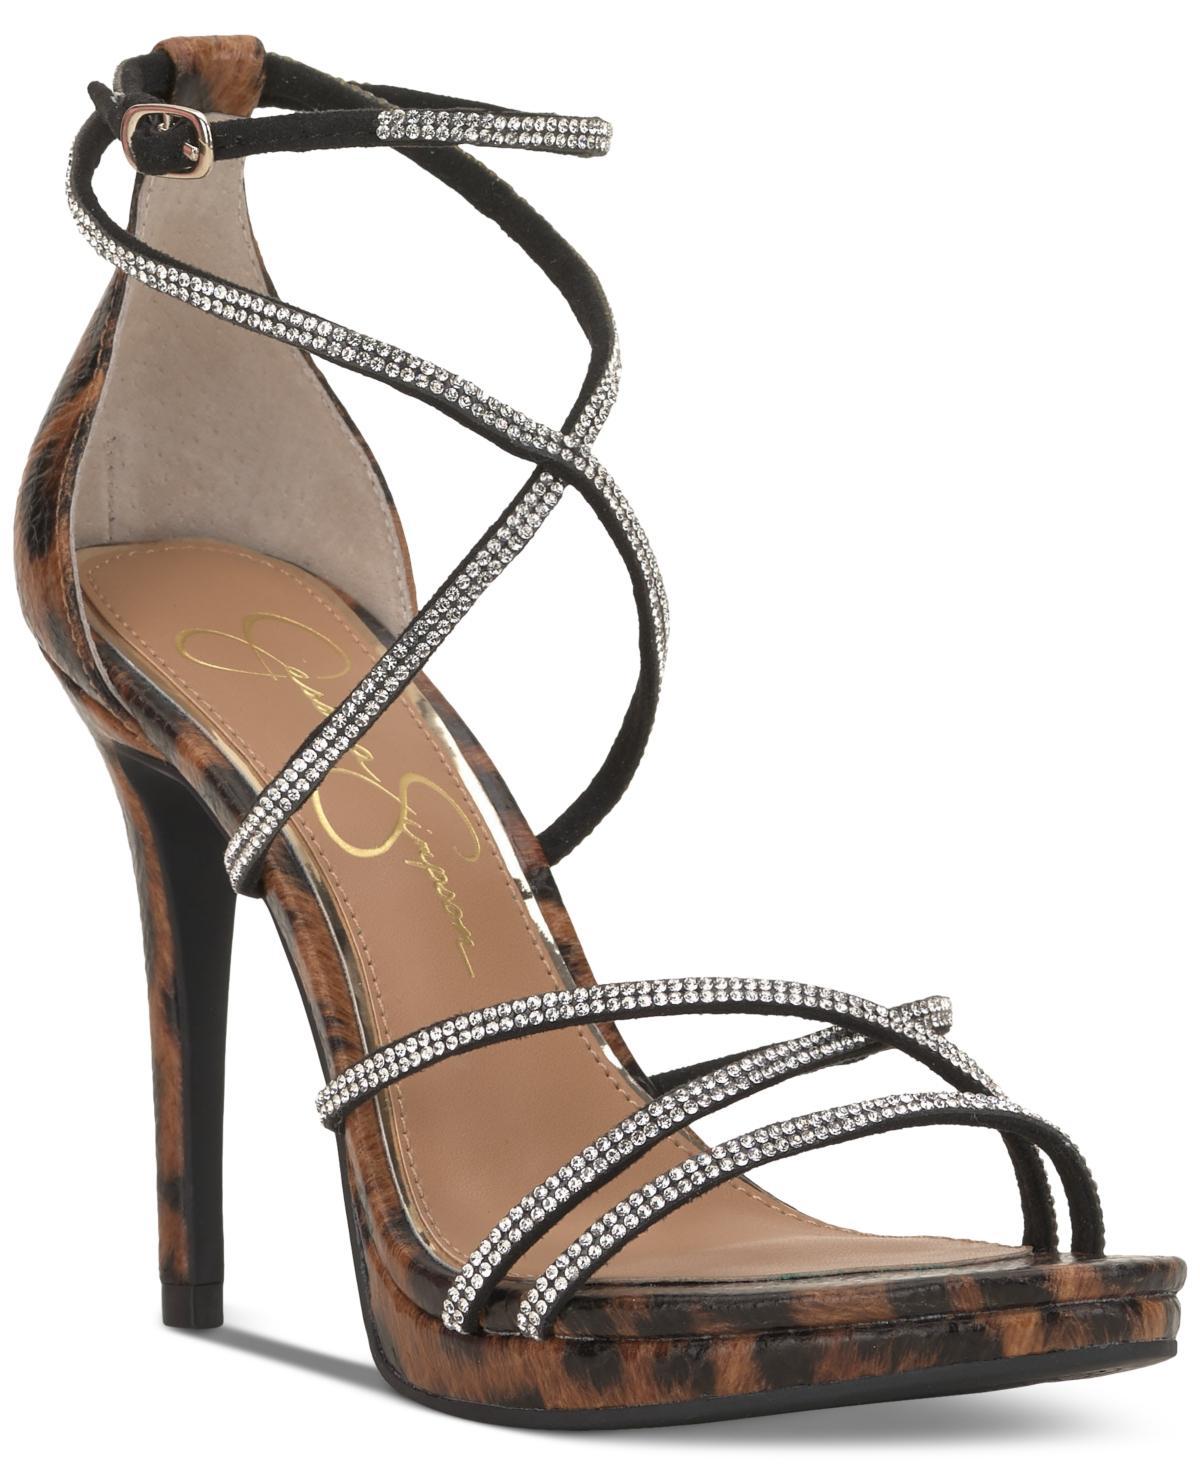 Jessica Simpson Jaeya Rhinestone Ankle Strap Strappy Dress Sandals Product Image